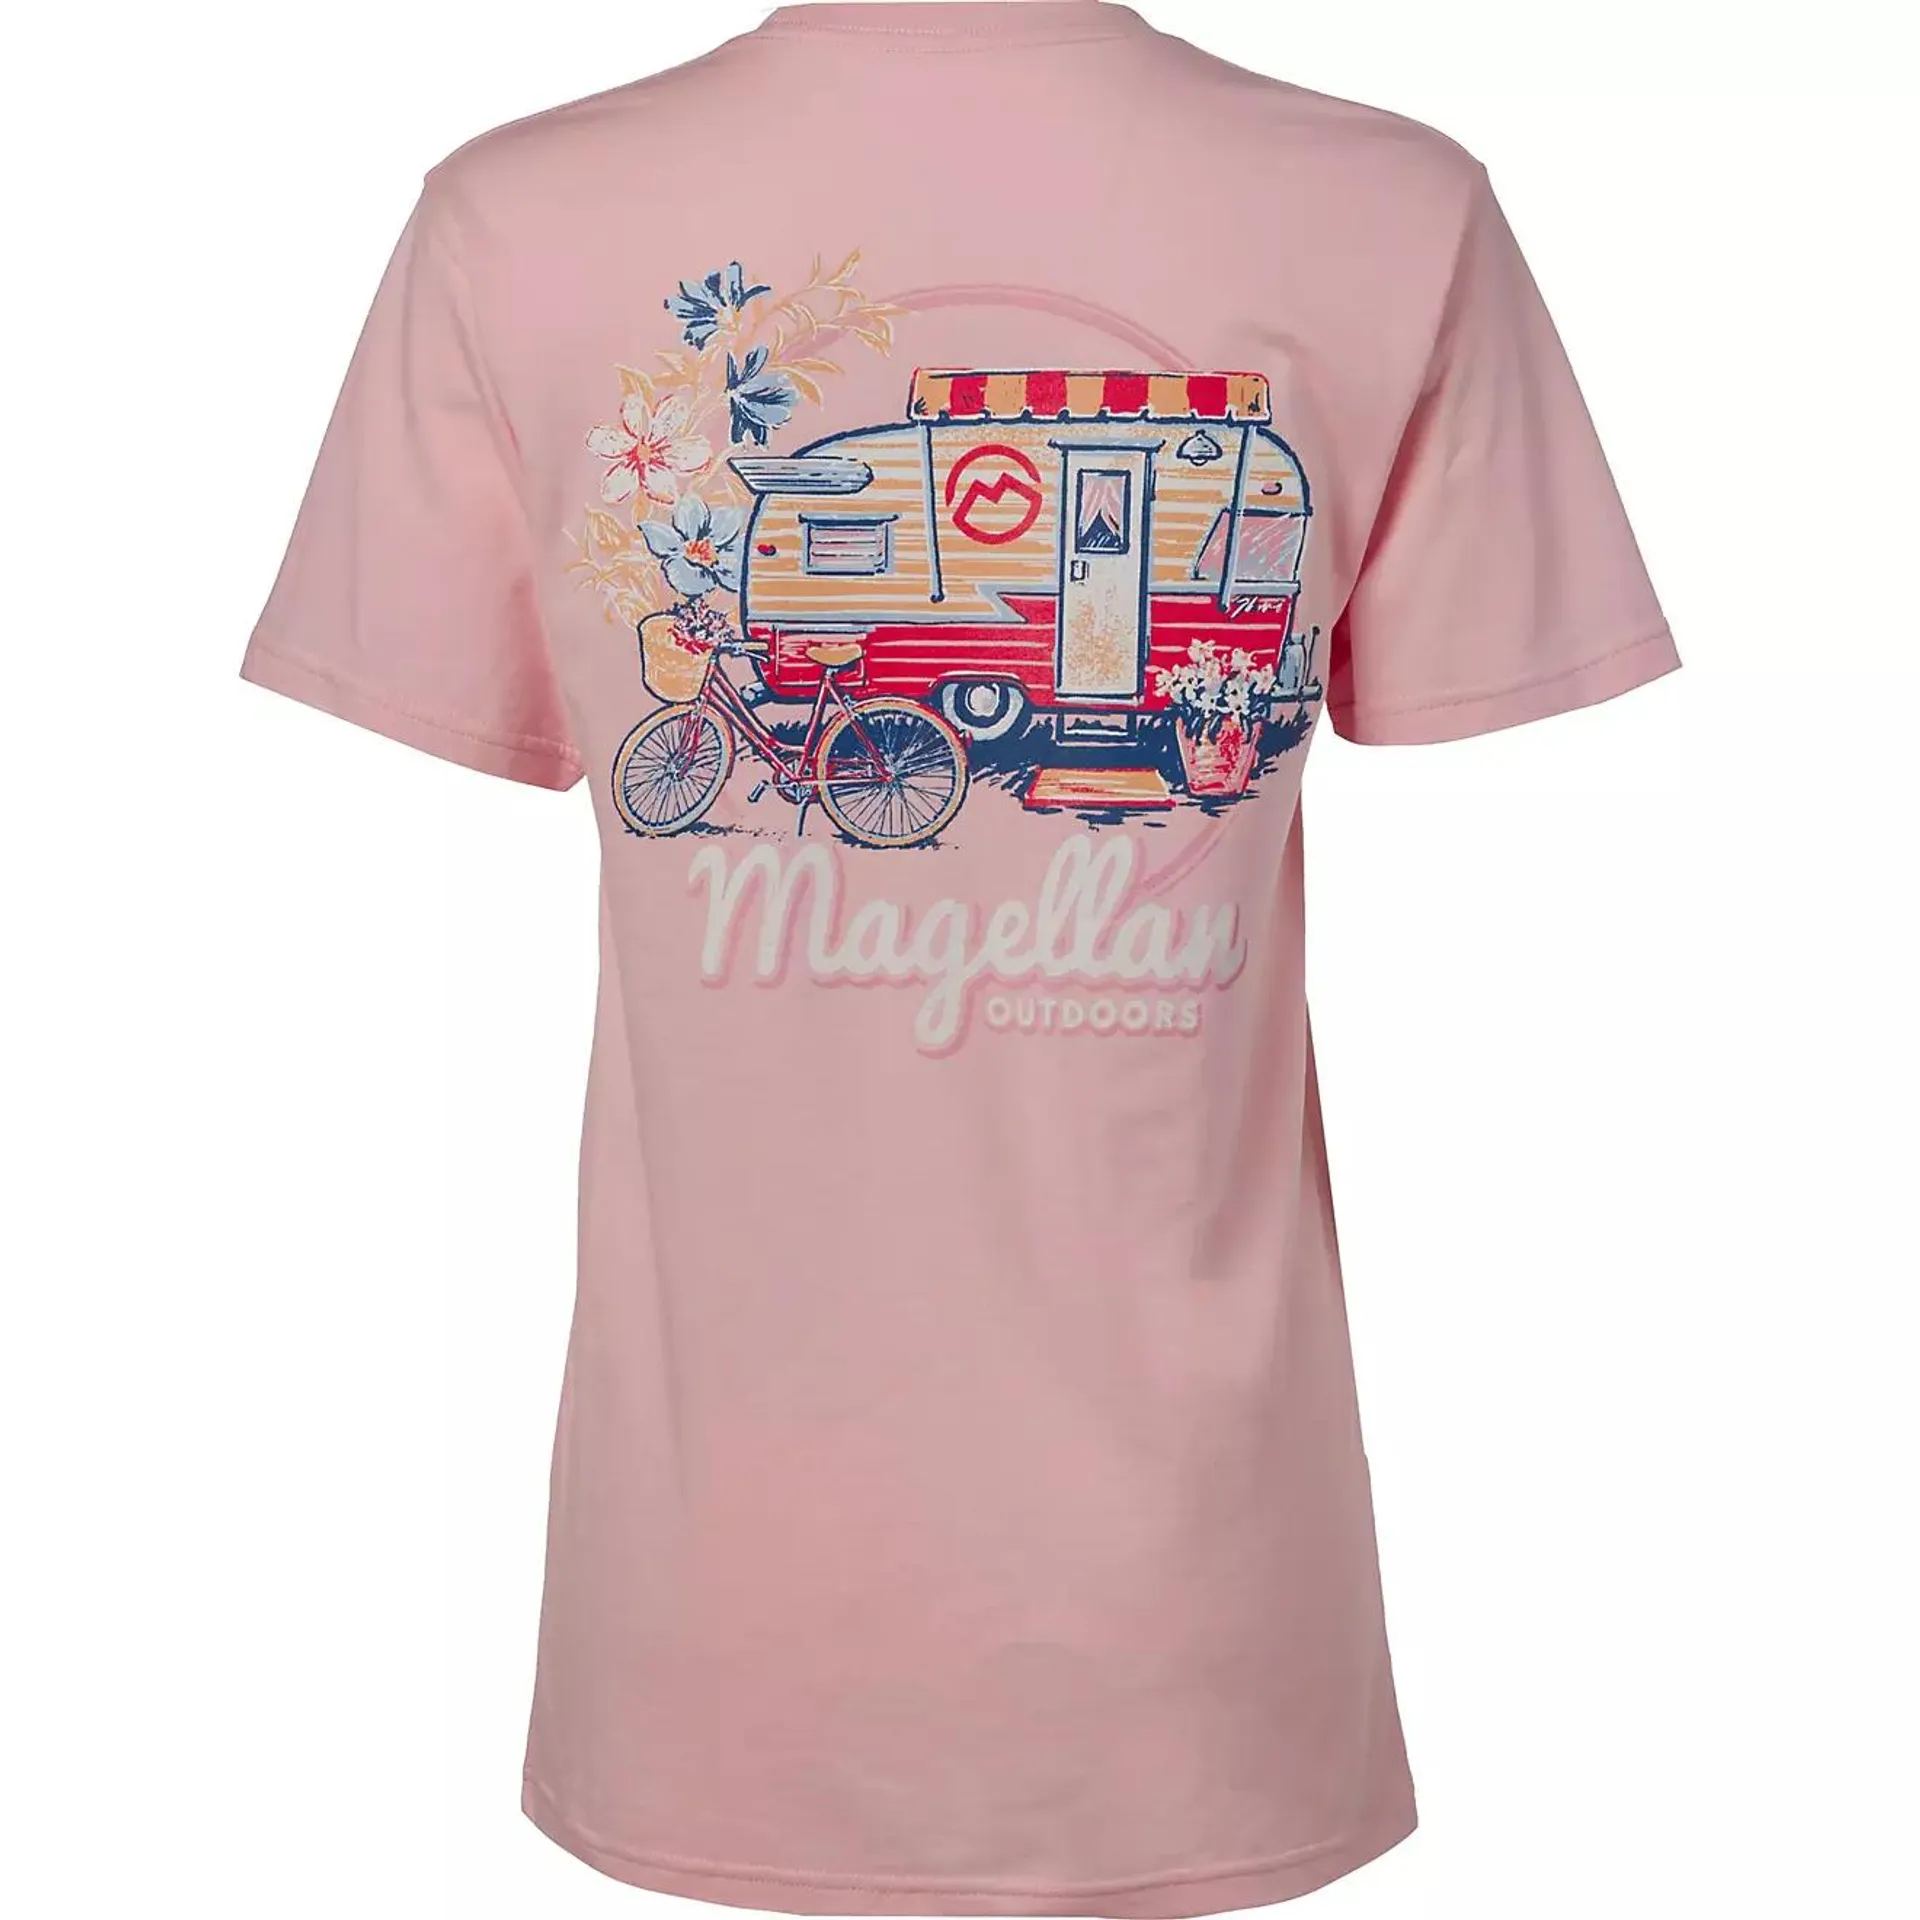 Magellan Outdoors Women's Retro Camper T-Shirt